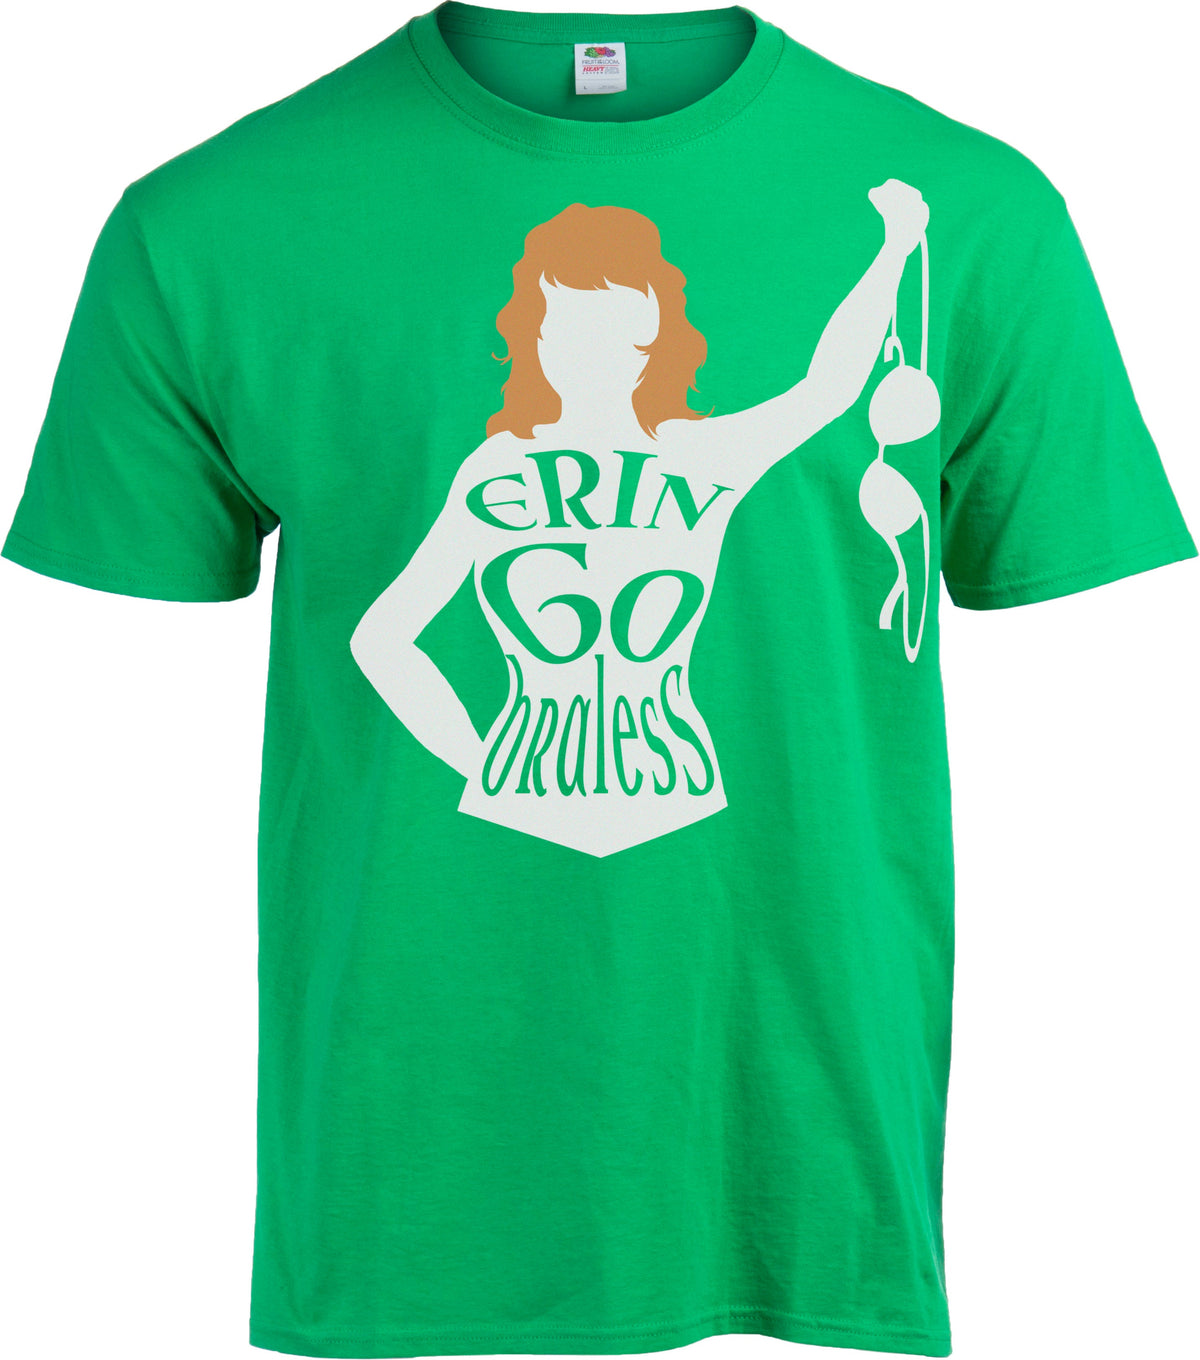 Erin Go Braless - Funny St. Patrick's Day Raunchy Humor Pub T-shirt - Men's/Unisex